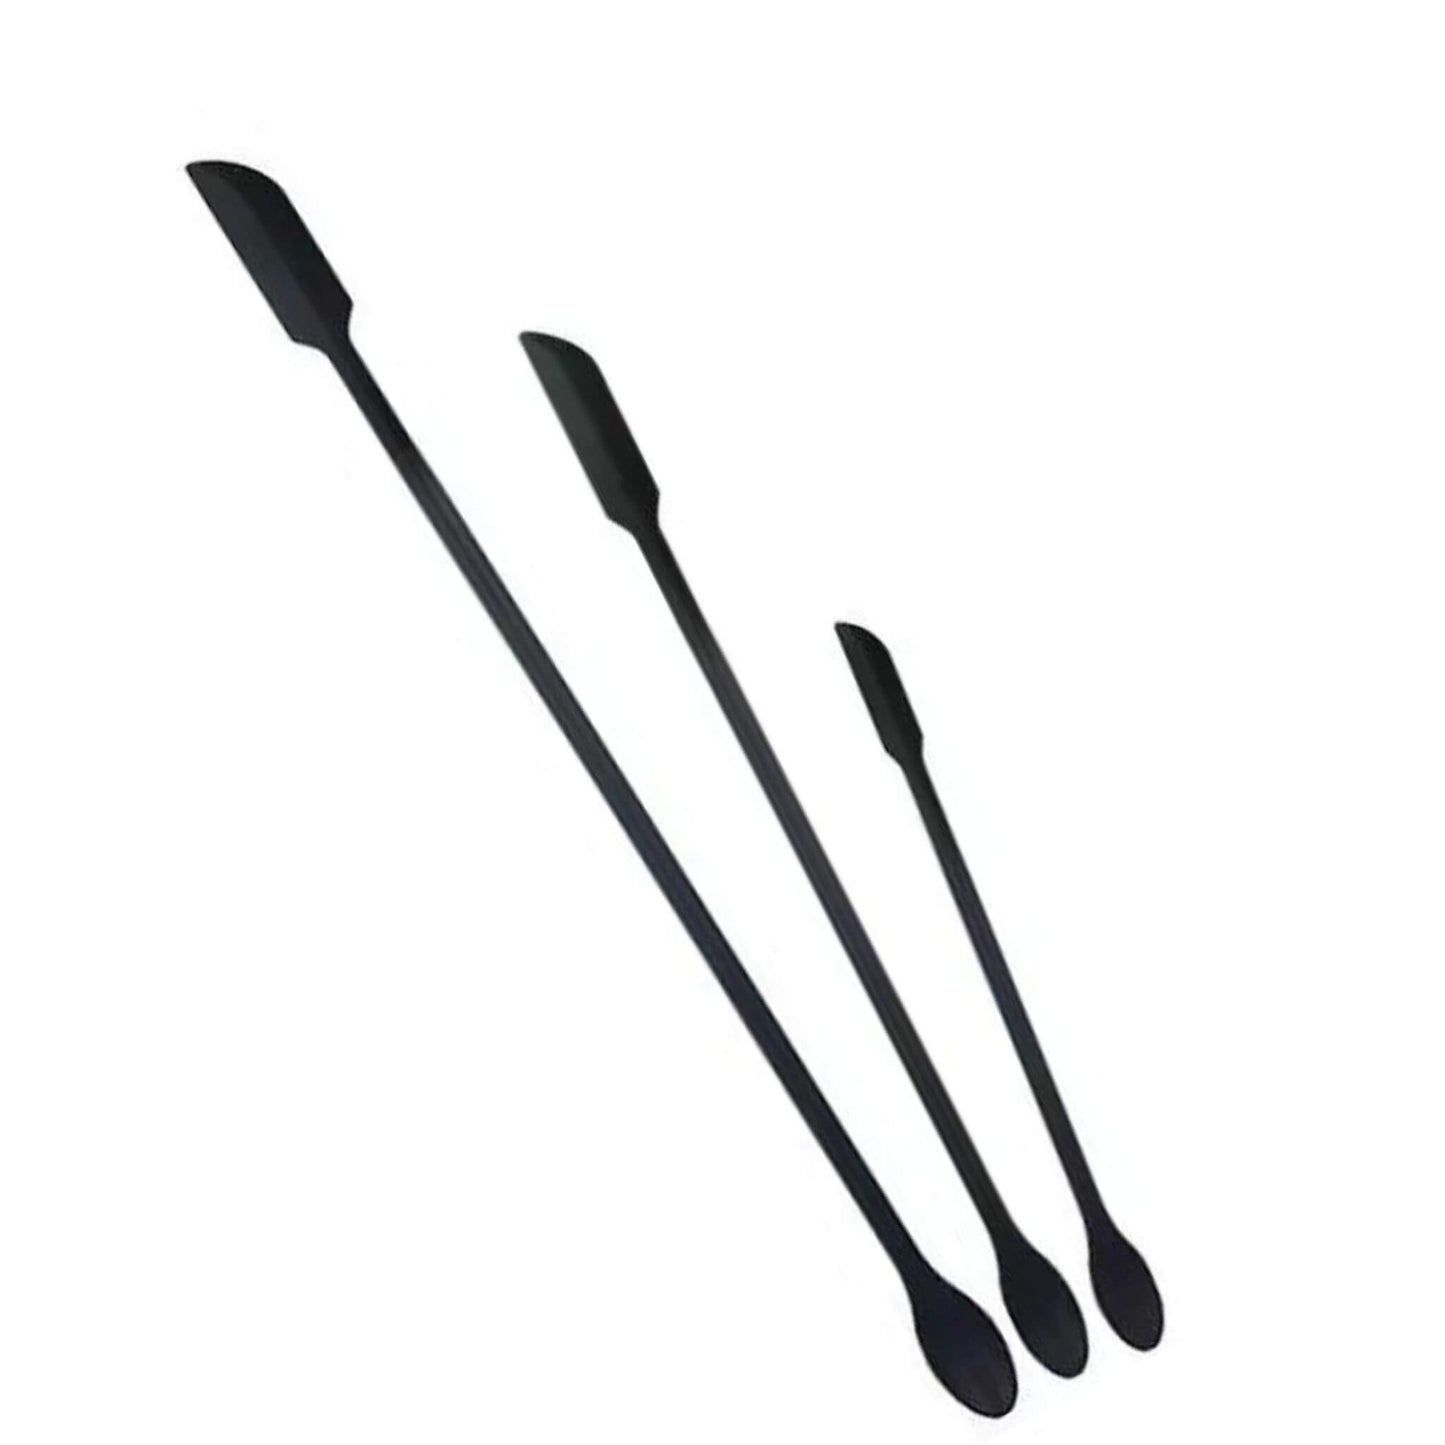 set of 3 jar spatula scrapers in black with spoon end